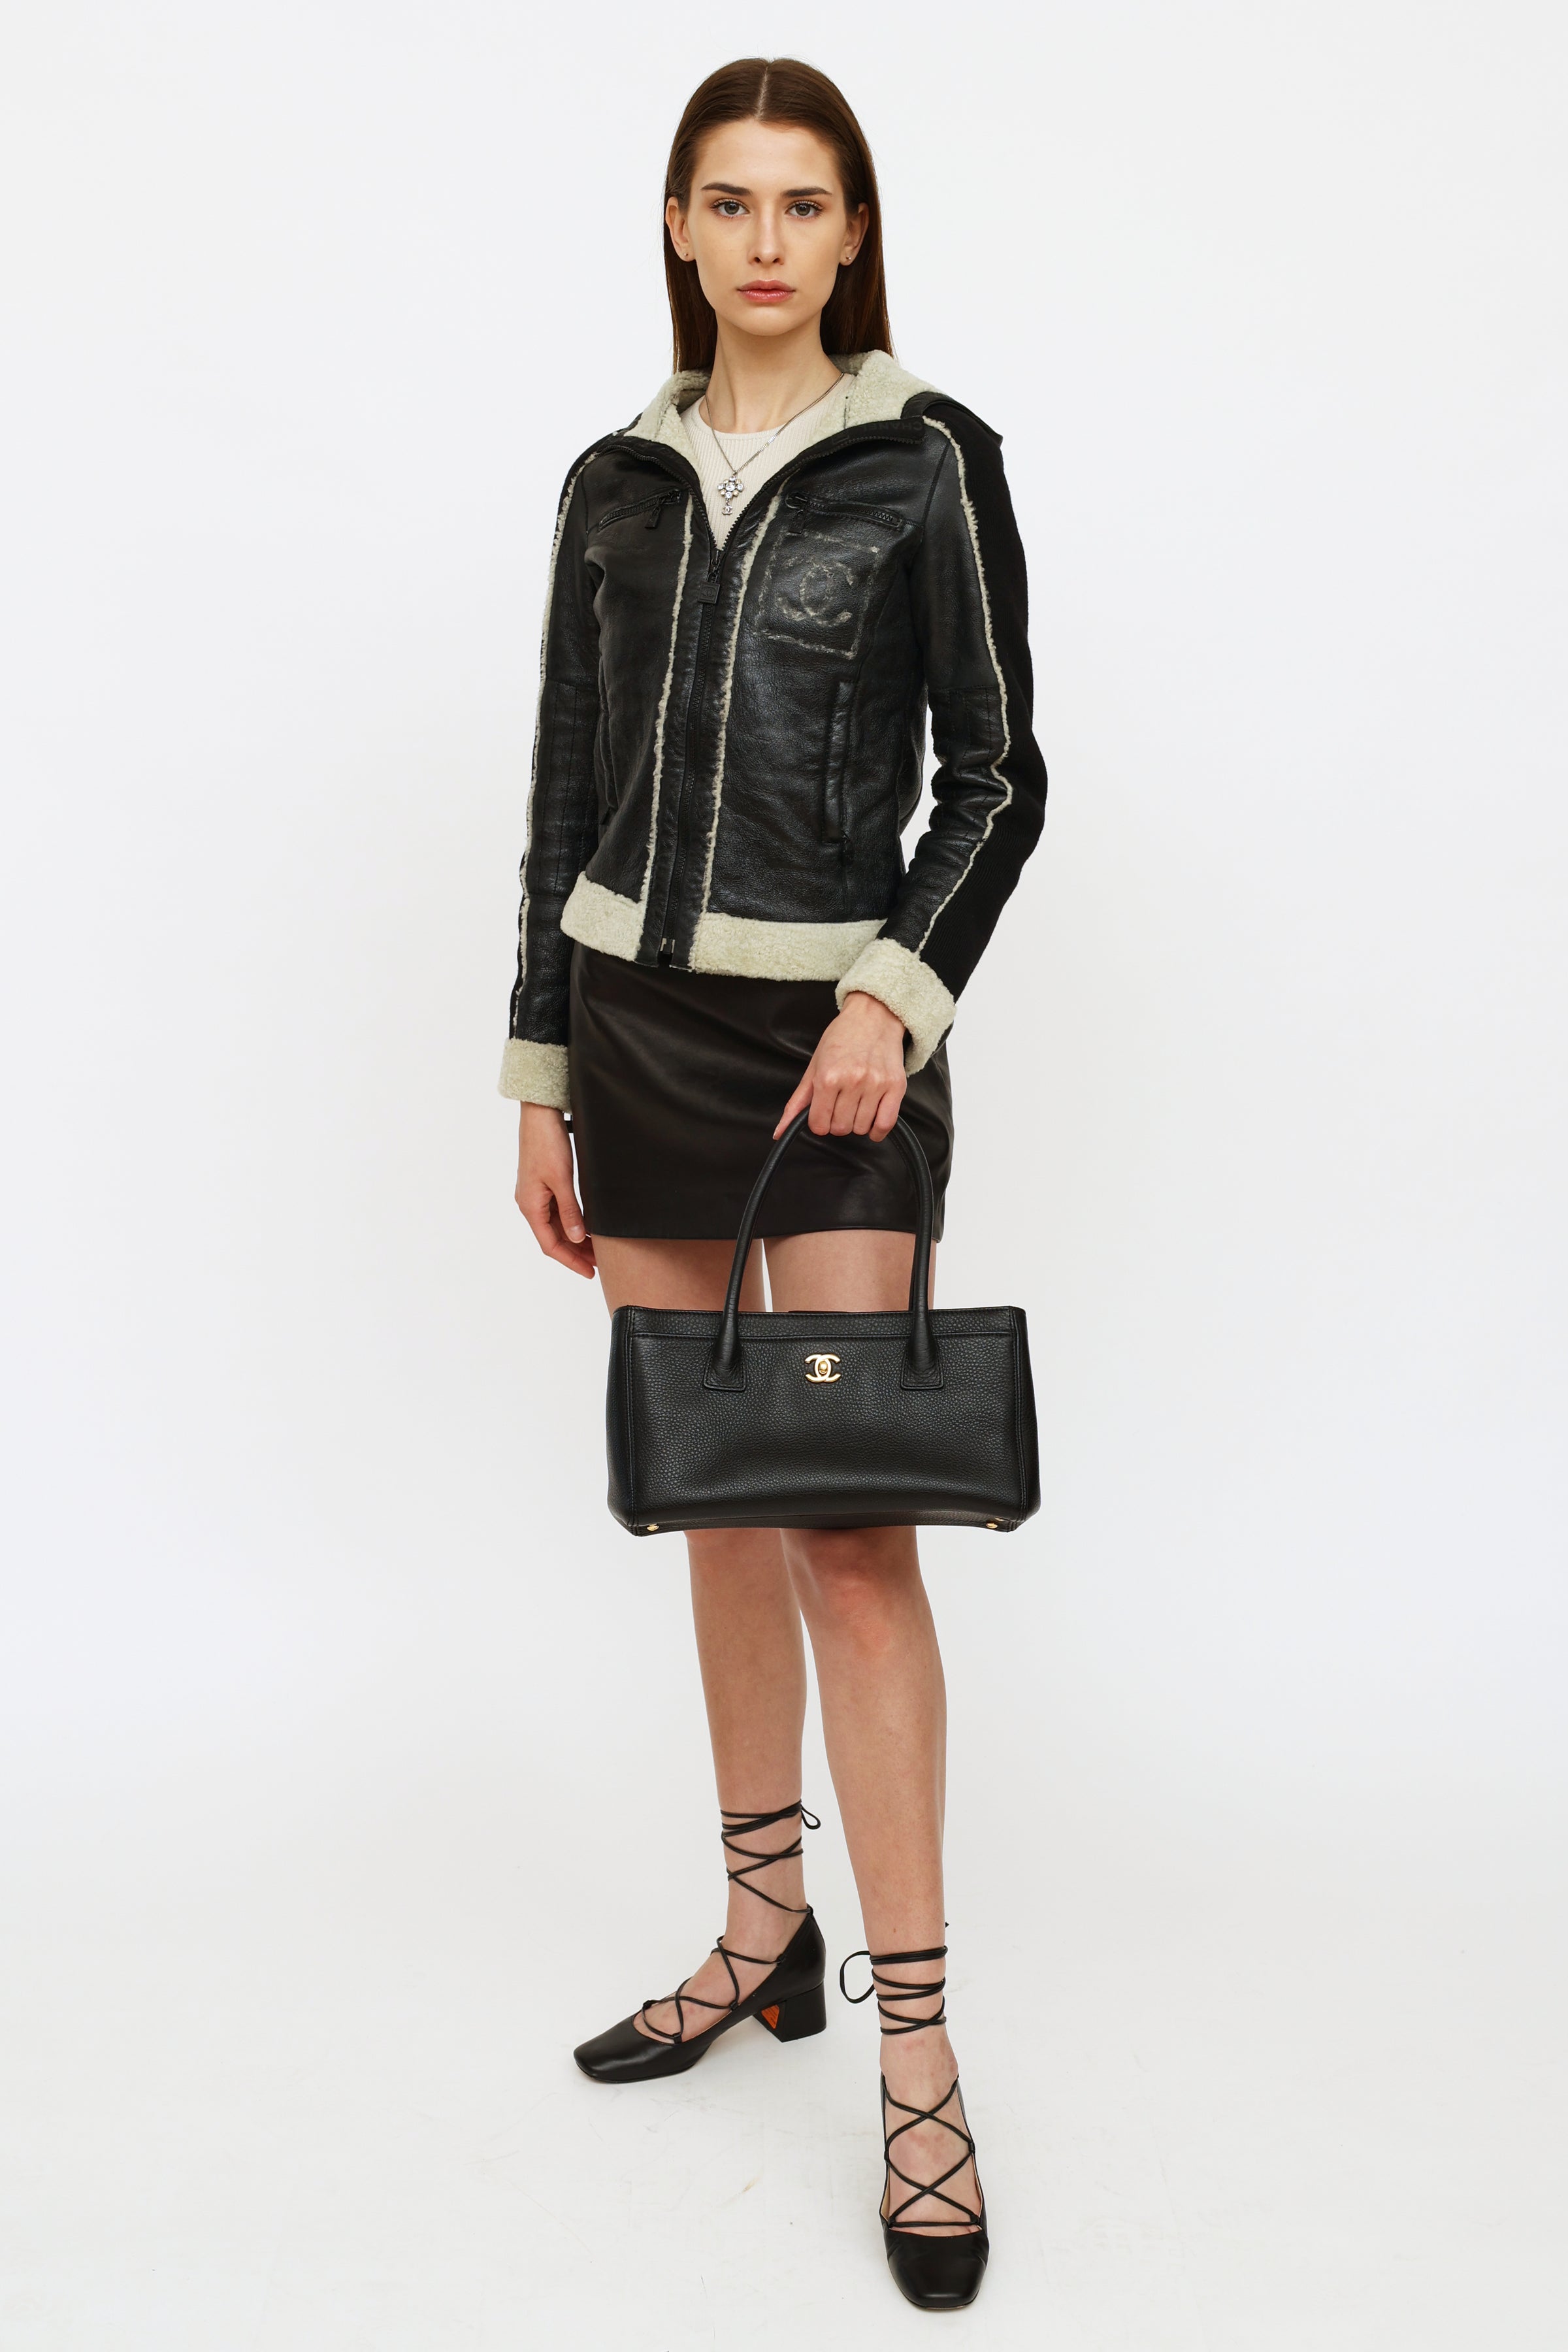 Chanel  Chanel Cerf Tote in Dark Grey on Designer Wardrobe